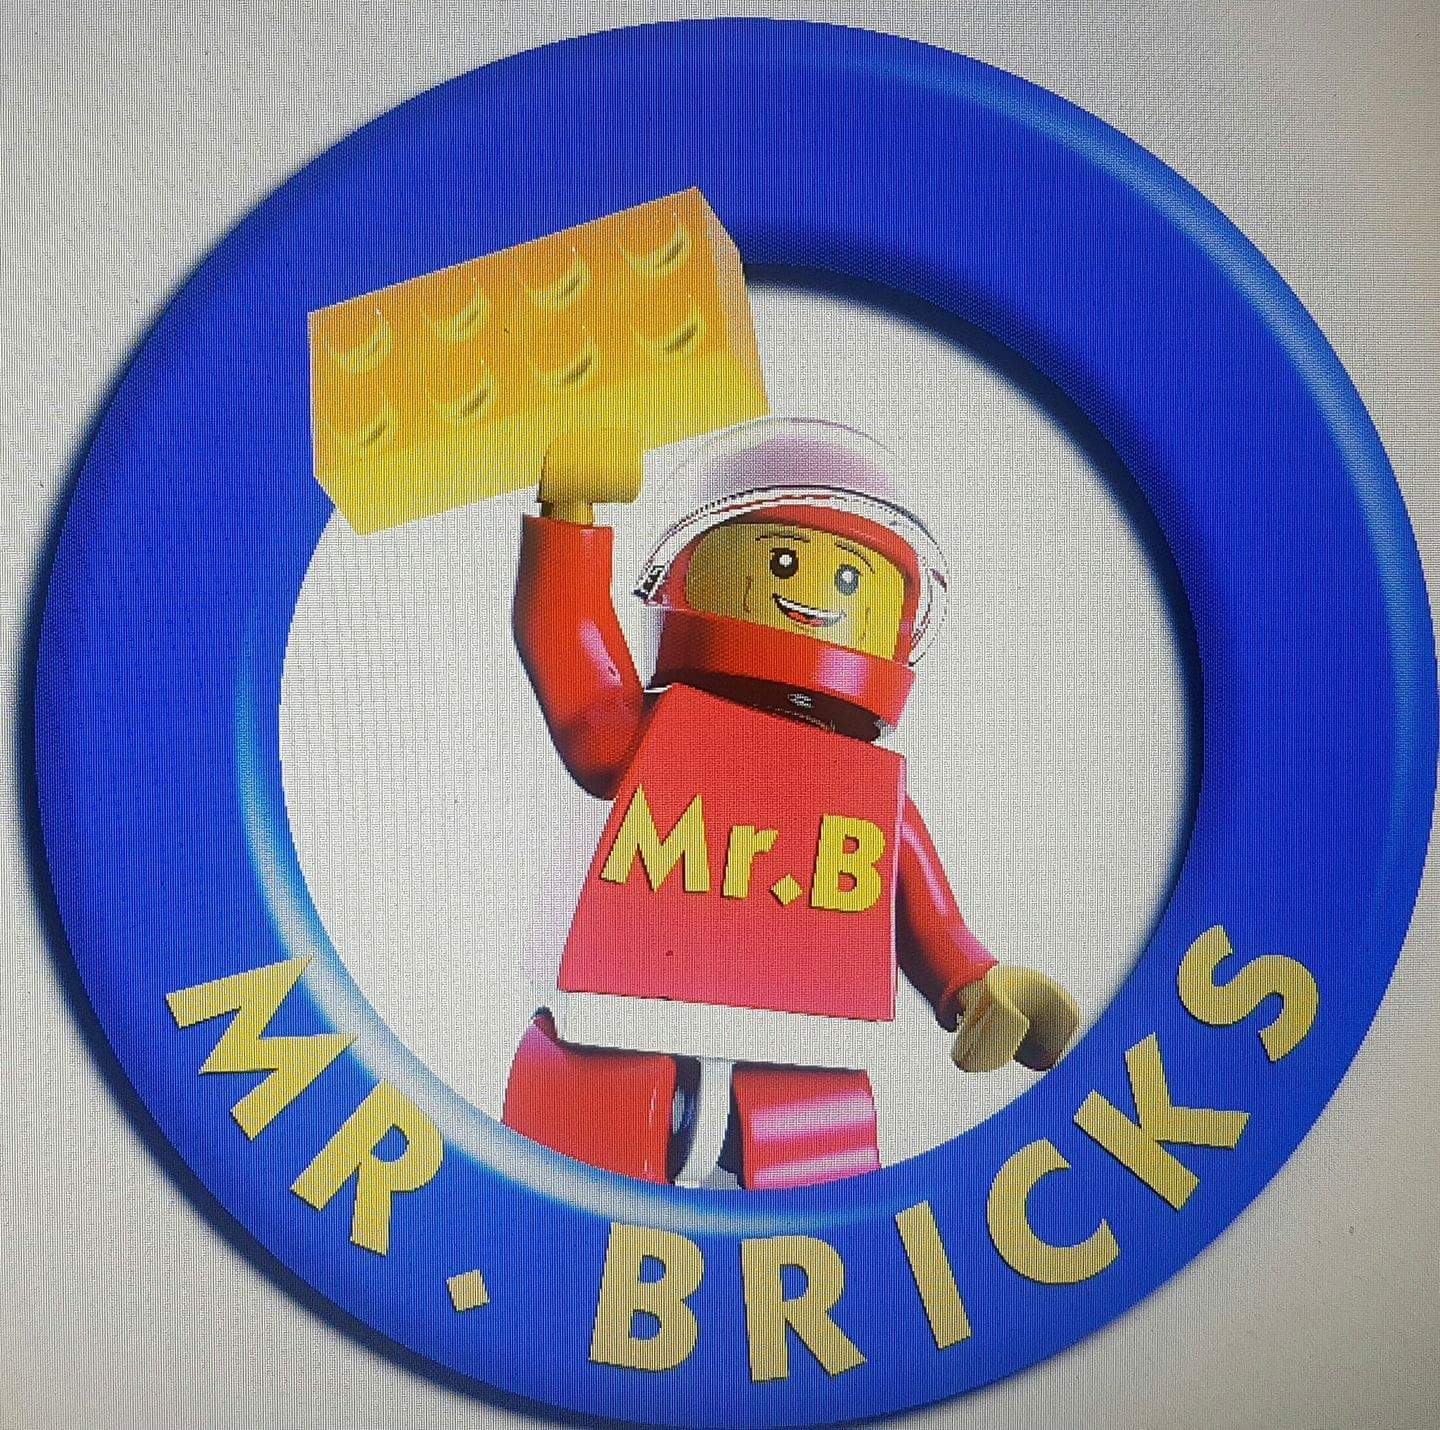 Mr. Bricks